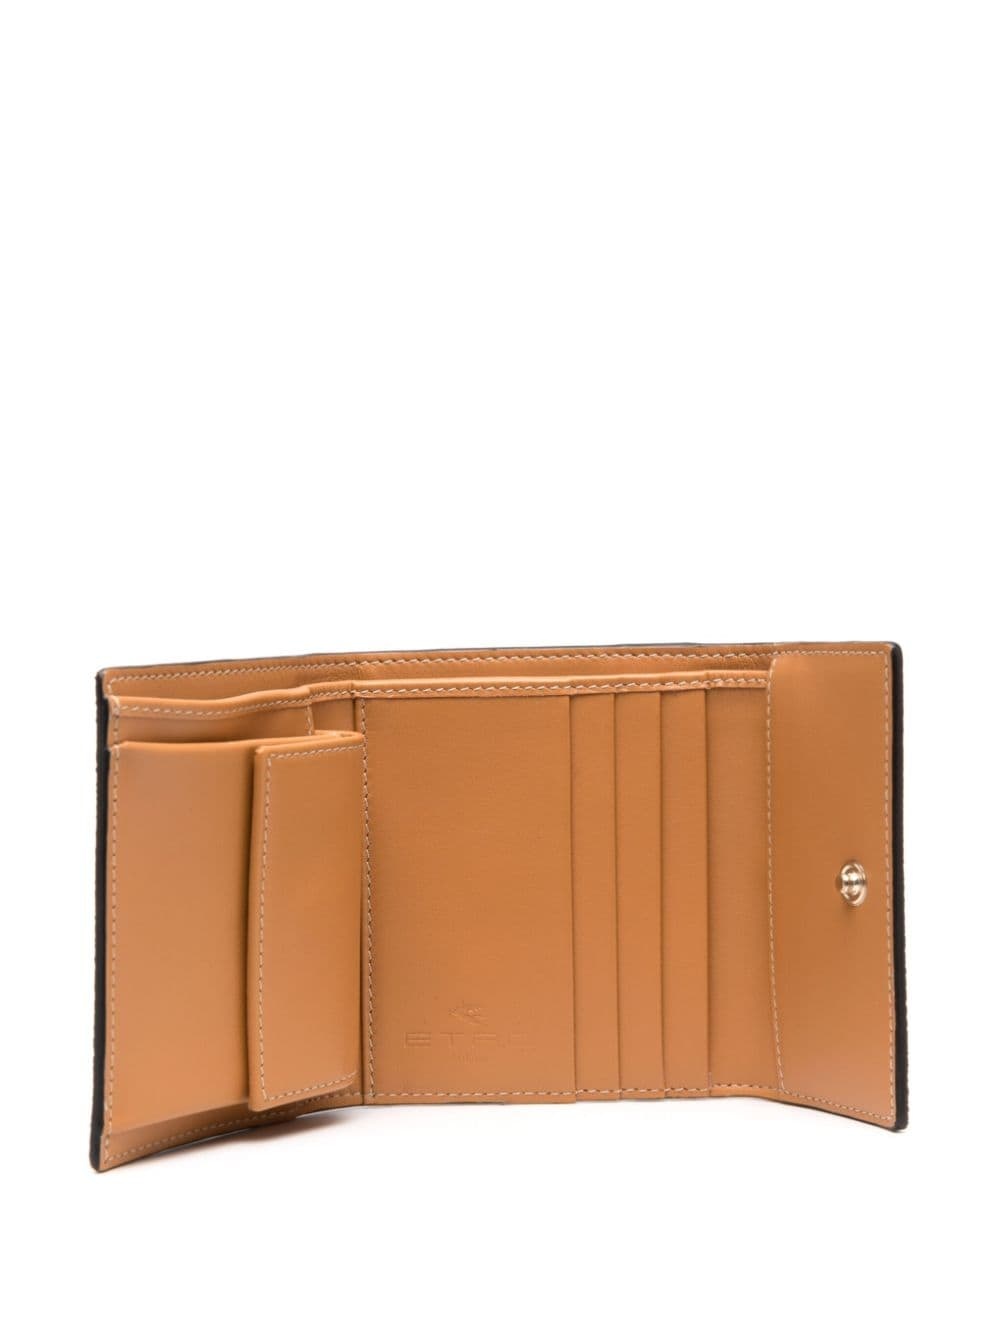 paisley-pattern wallet - 3